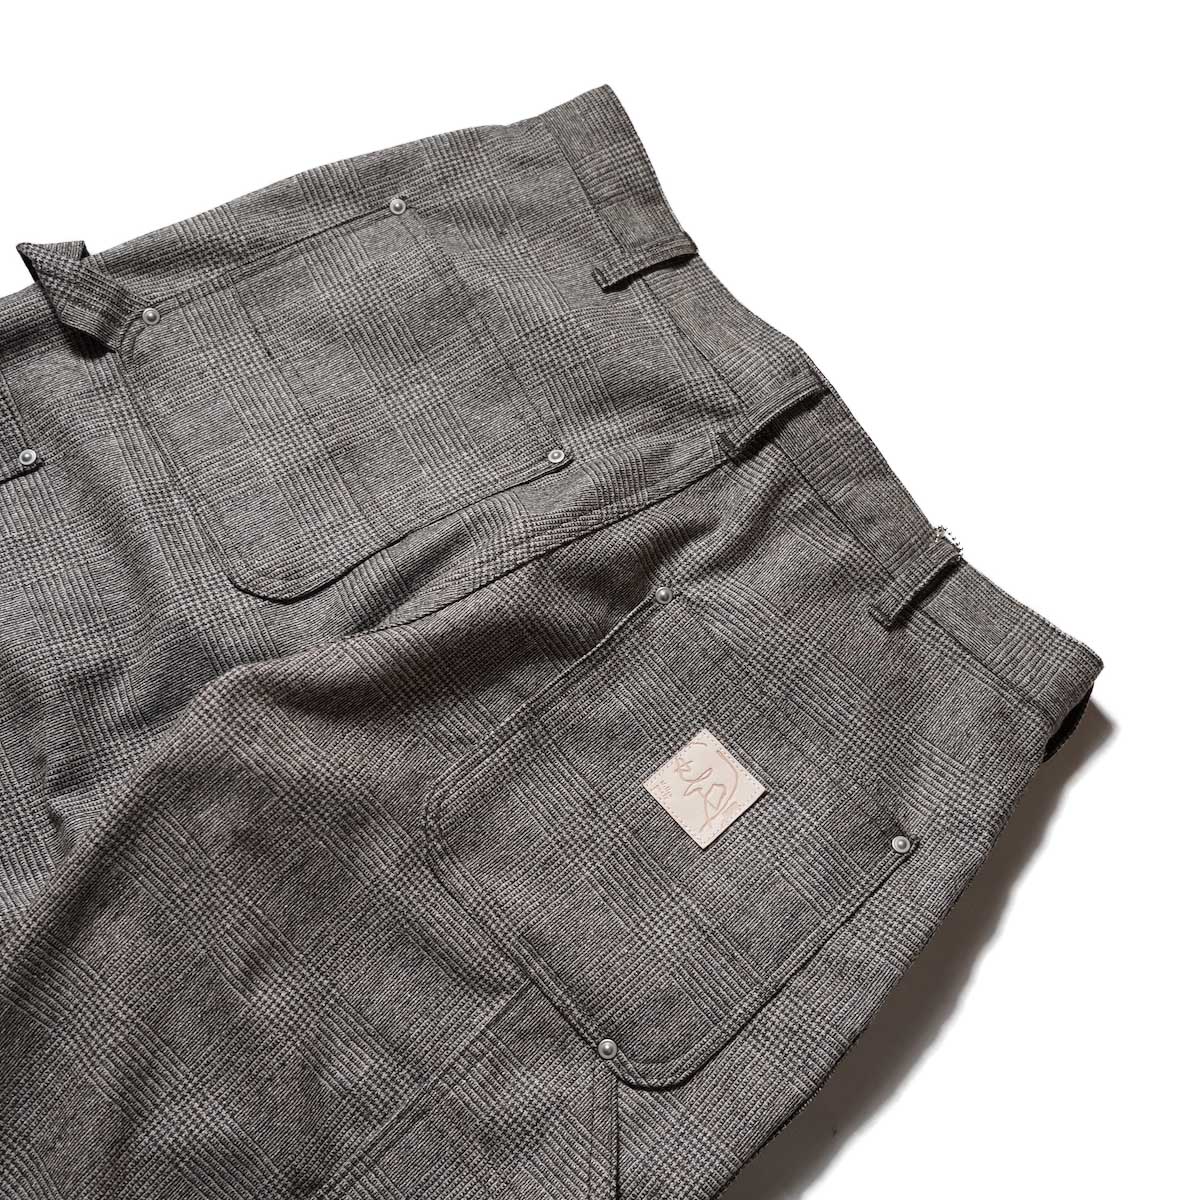 Willow Pants / P-013 Car Pants (Glen Check)ヒップポケット